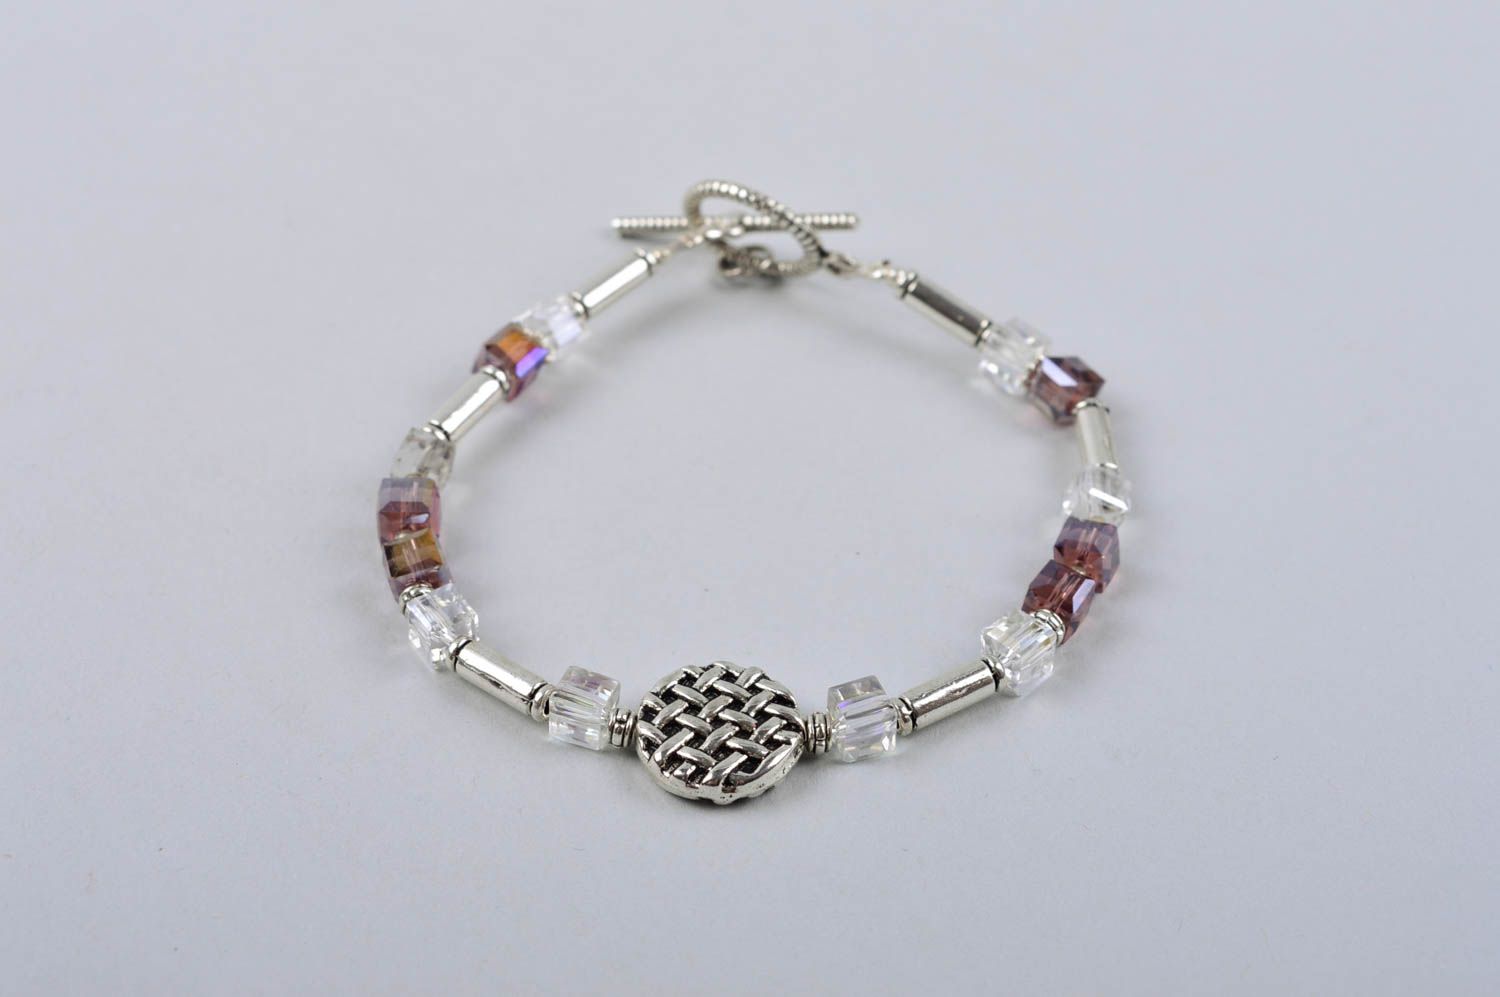 Fashion jewelry handmade designer bracelet beaded wrist accessory gift for women photo 3